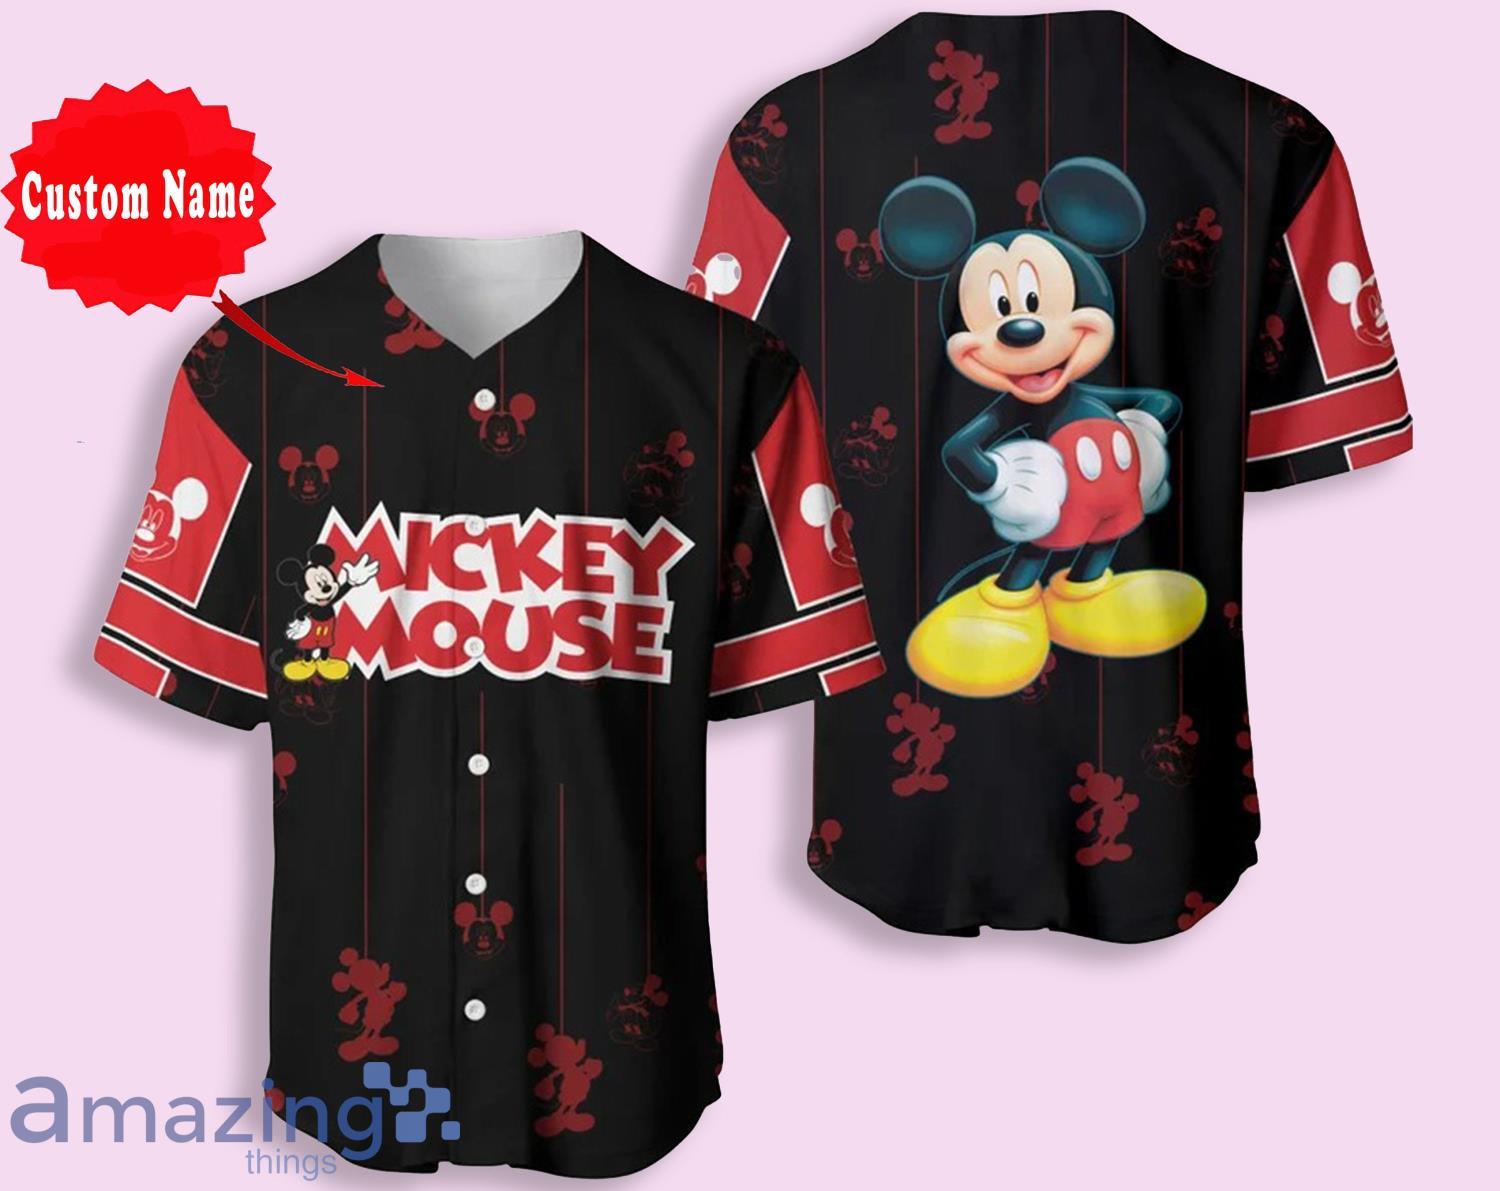 Personalized Disney Mickey 50th Anniversary Baseball Jersey - Kaiteez